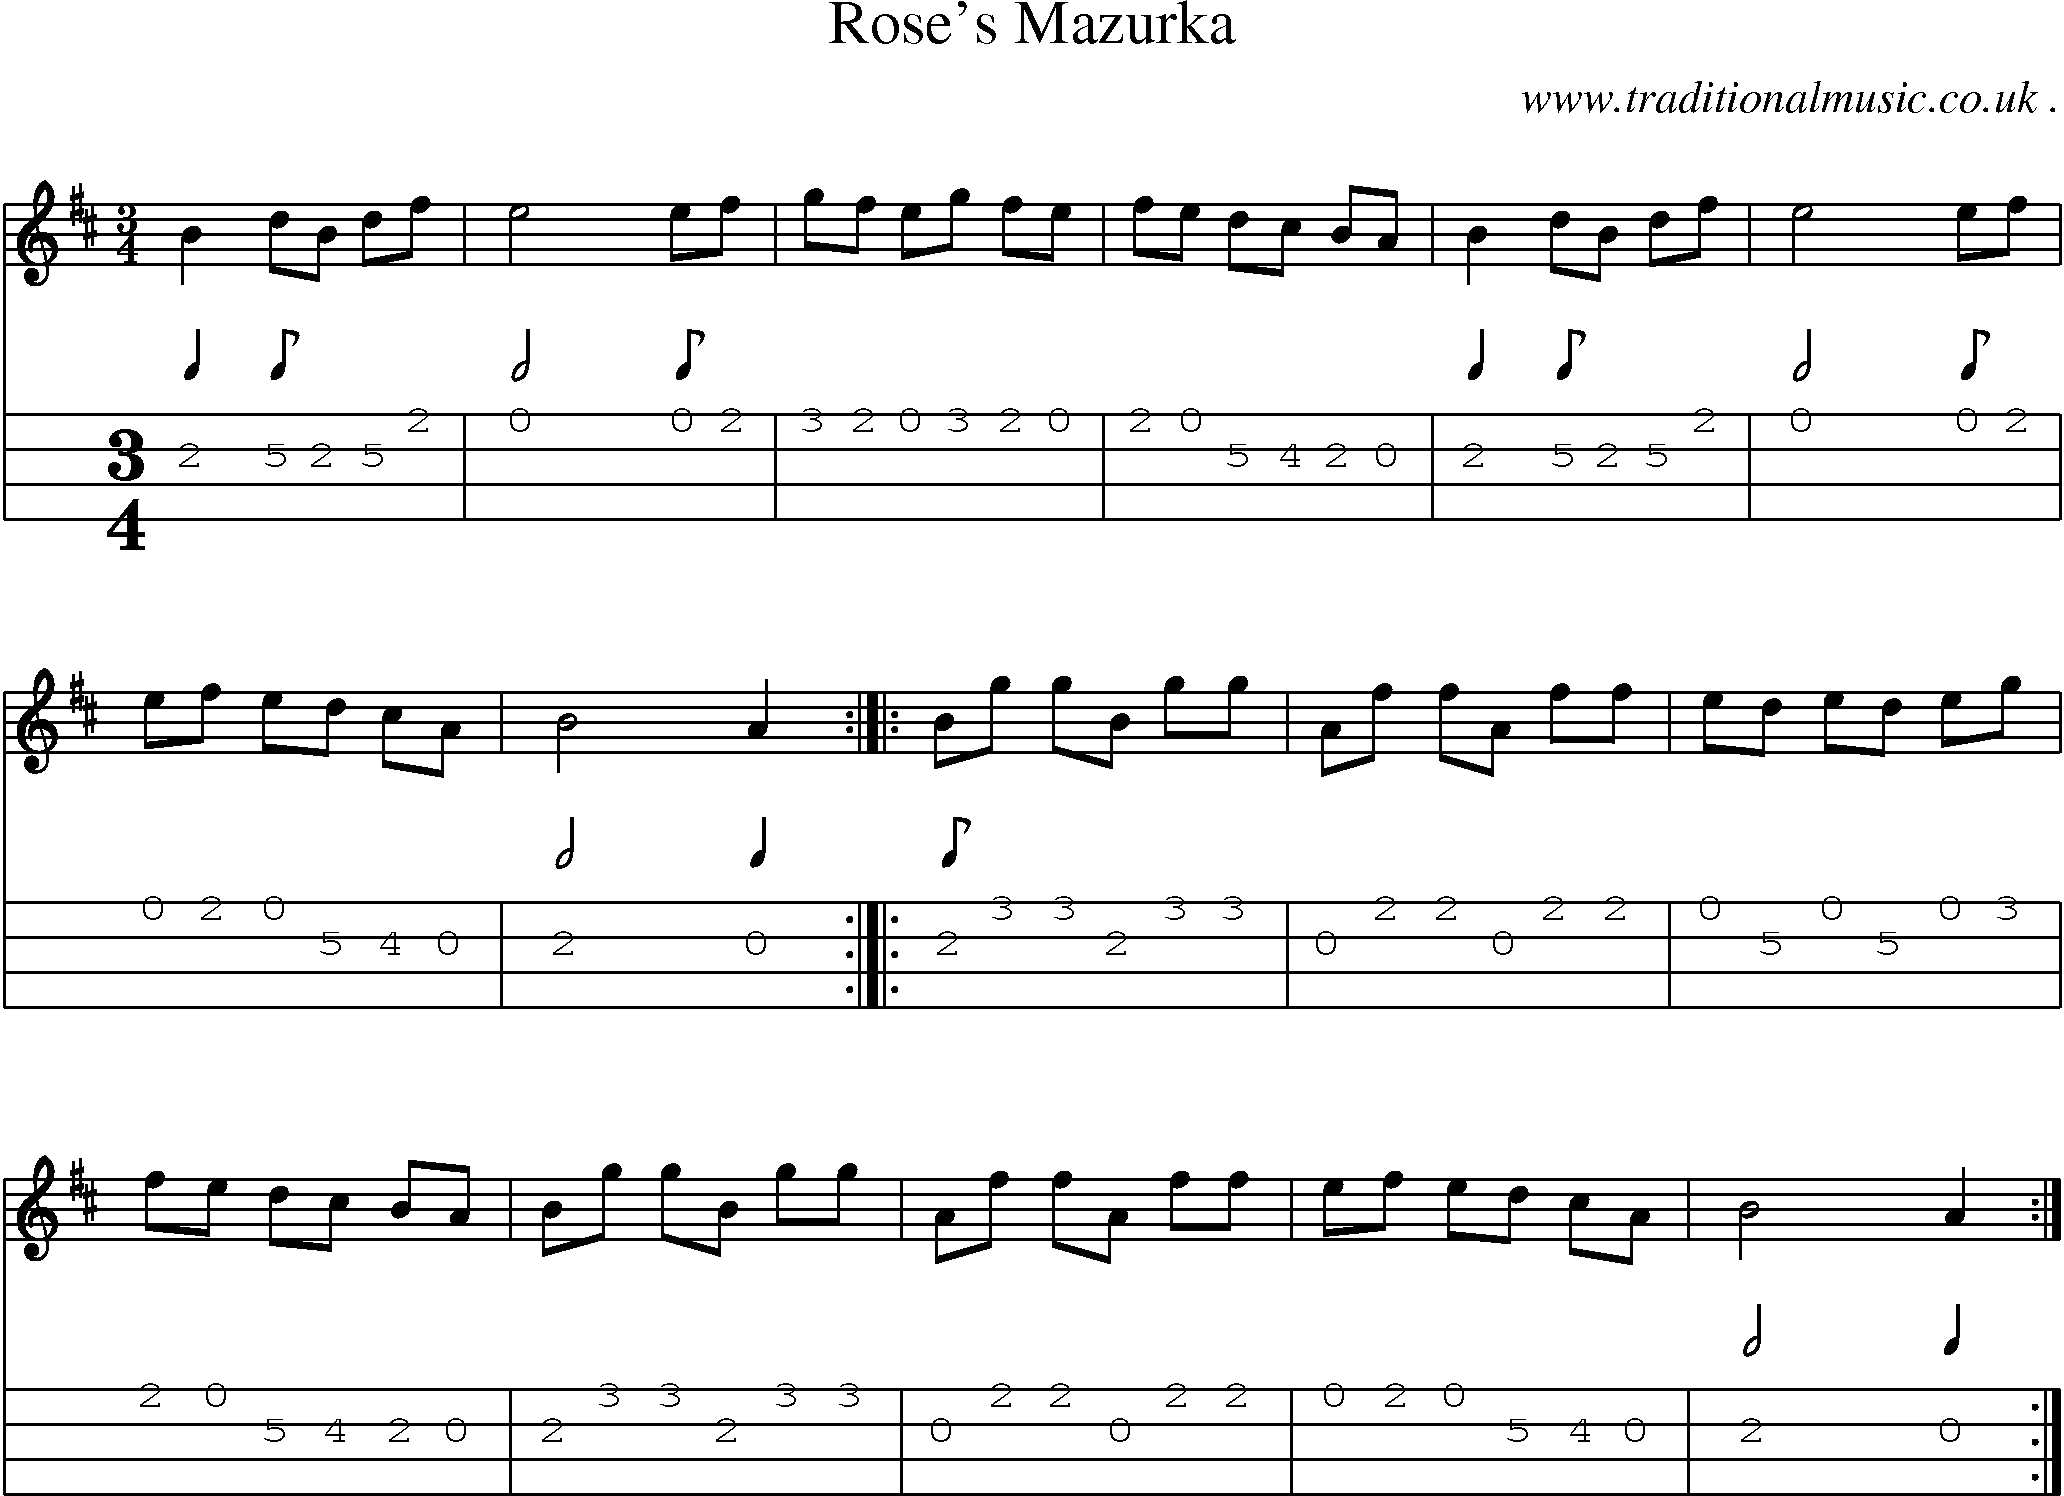 Sheet-Music and Mandolin Tabs for Roses Mazurka